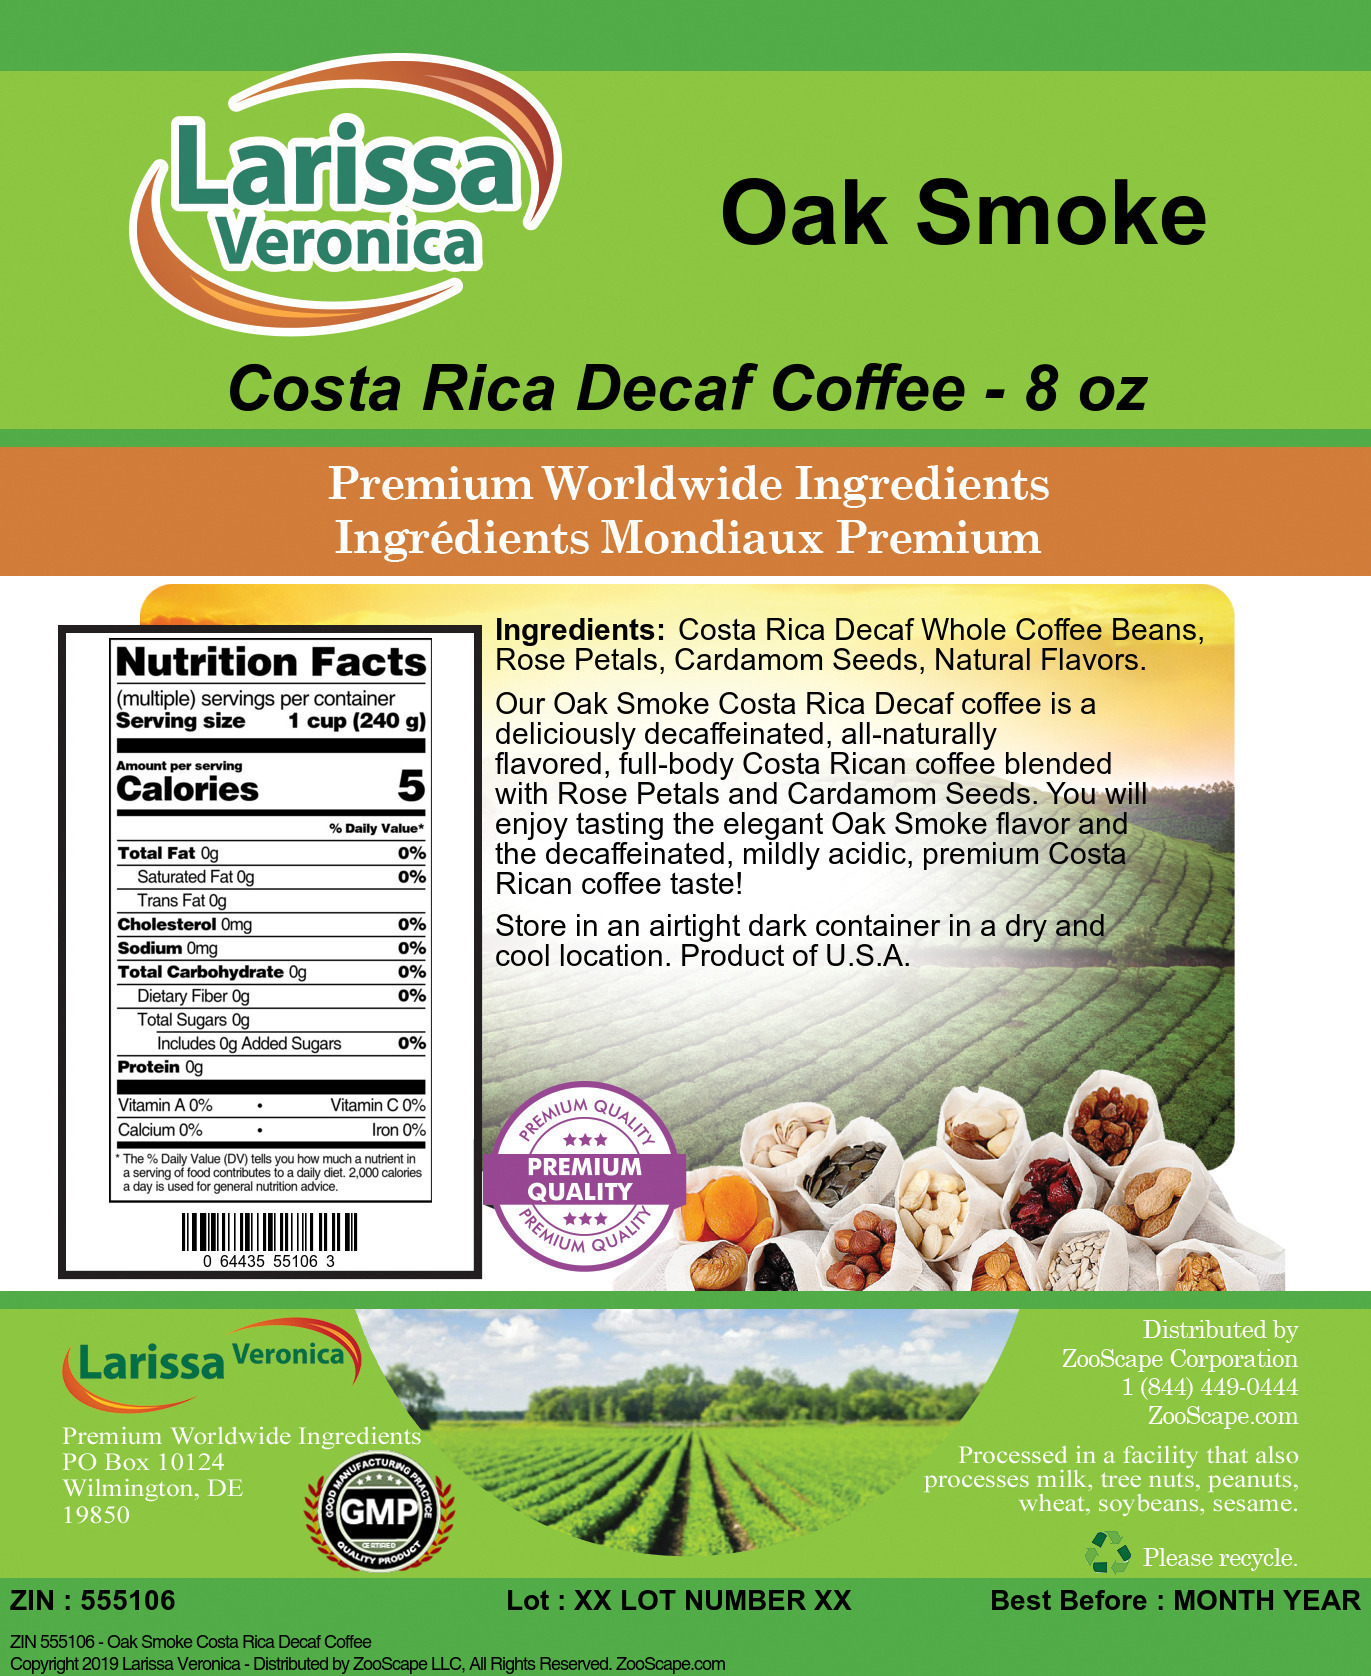 Oak Smoke Costa Rica Decaf Coffee - Label